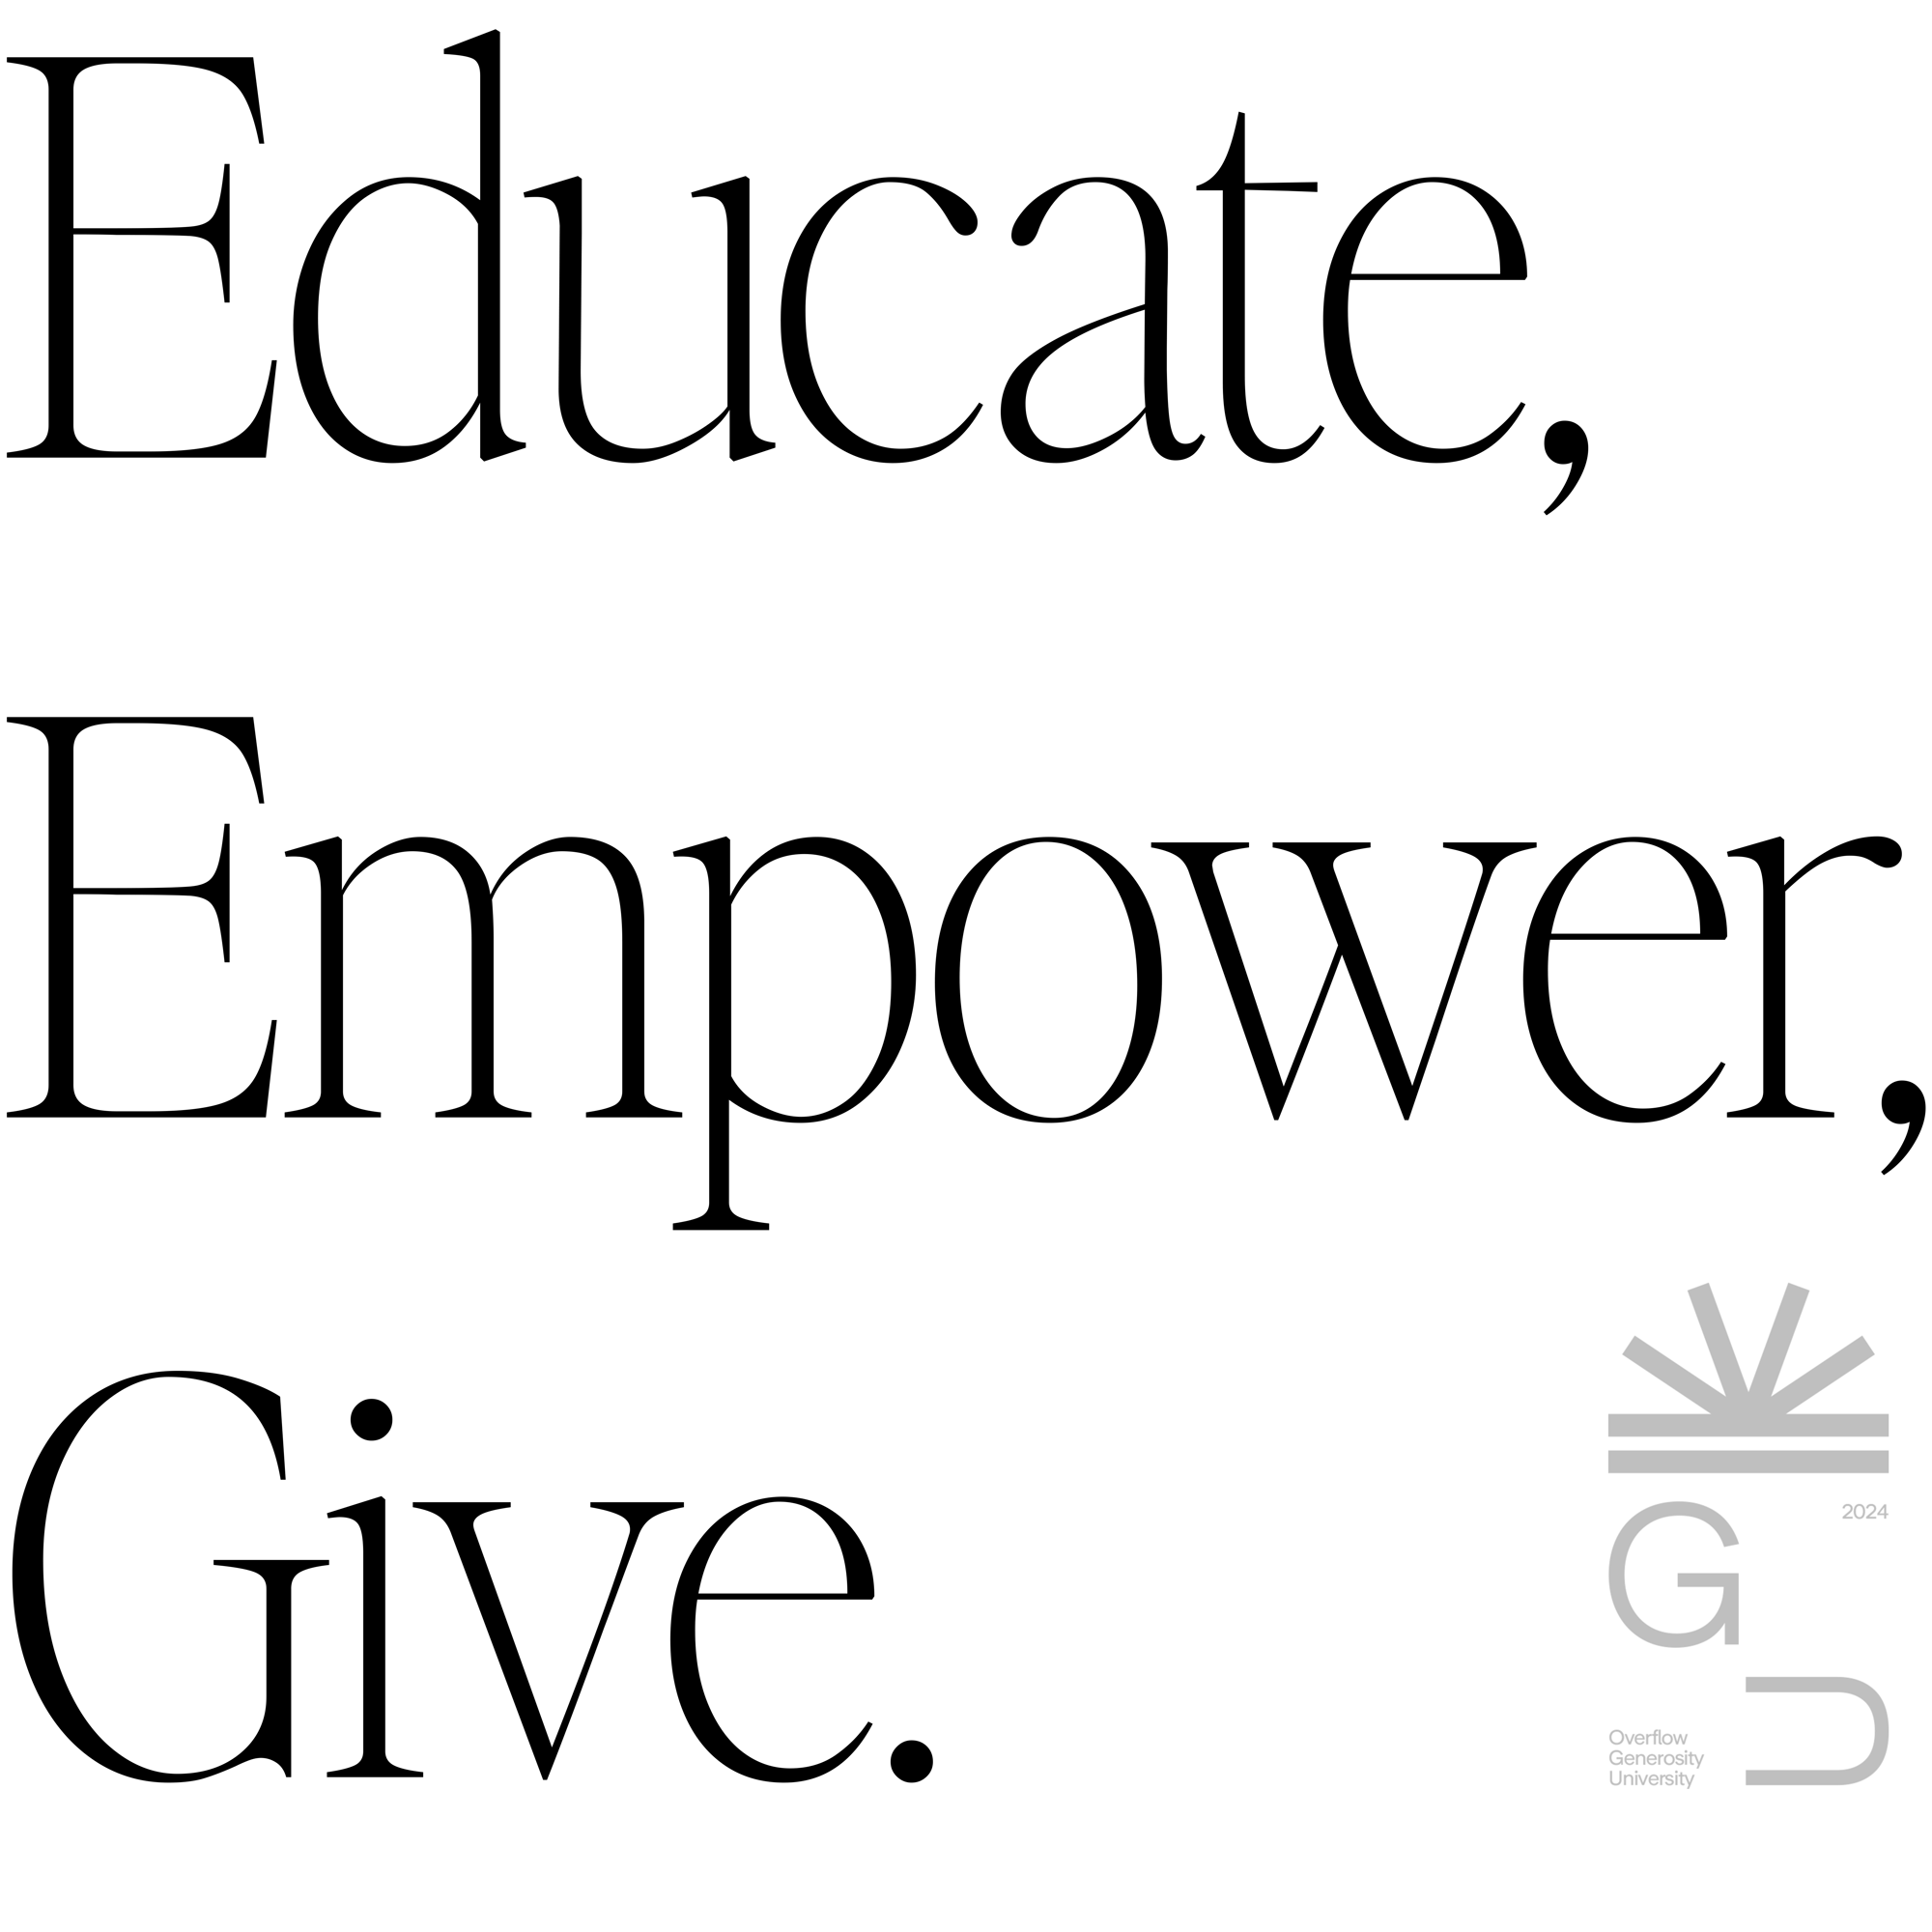 generosity-university-tagline-hero-2